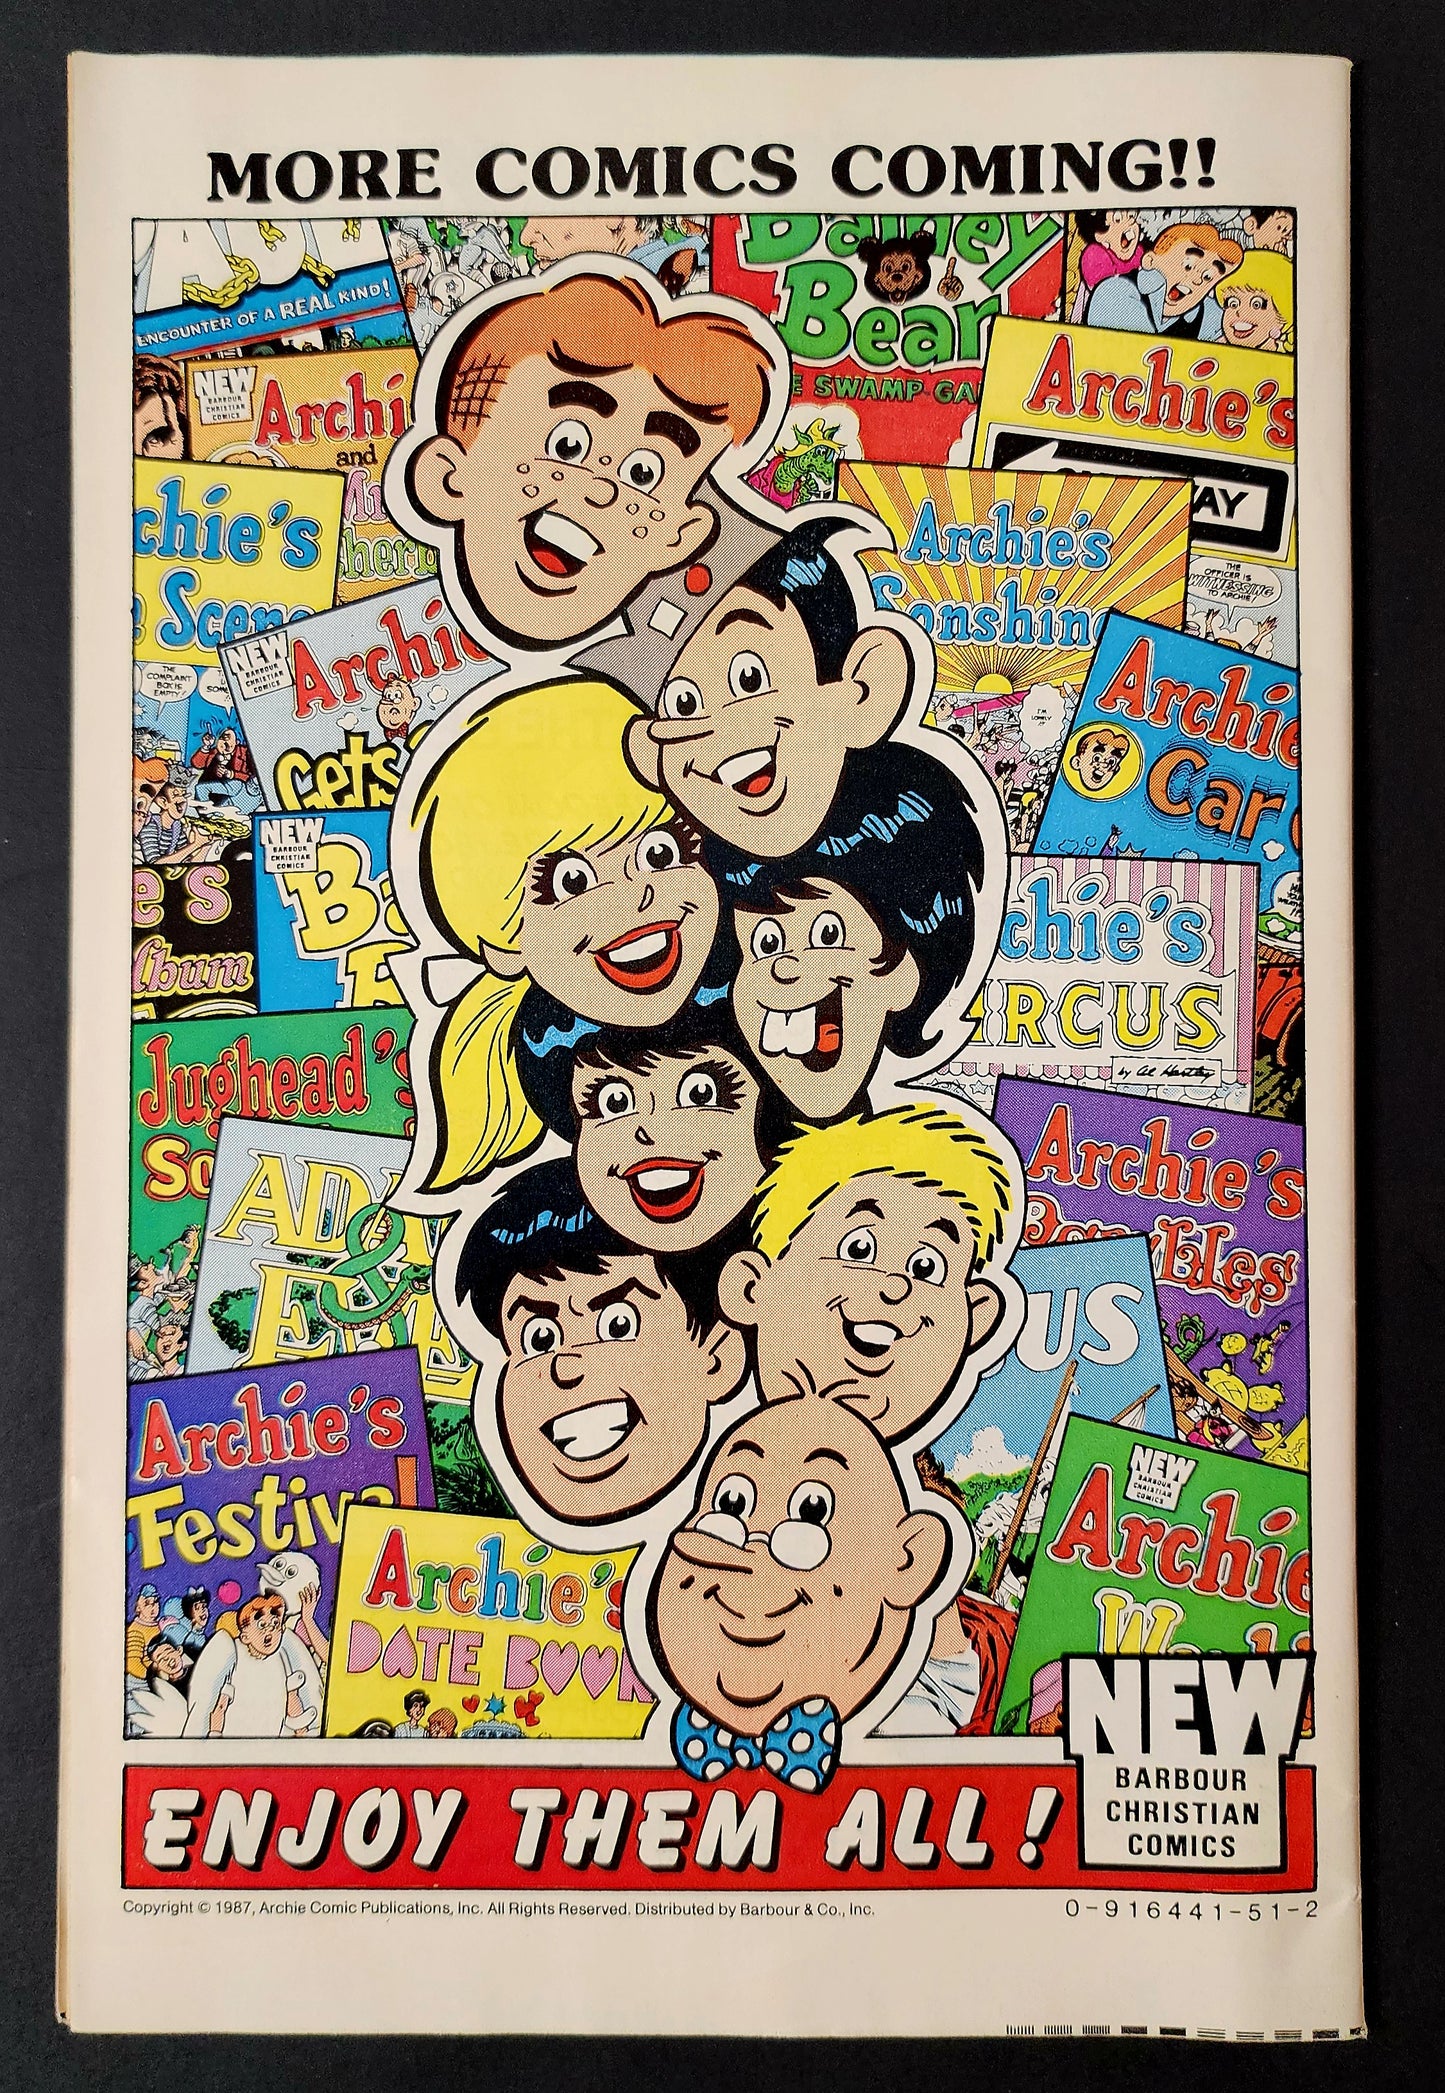 Archie's Festival (FN-)